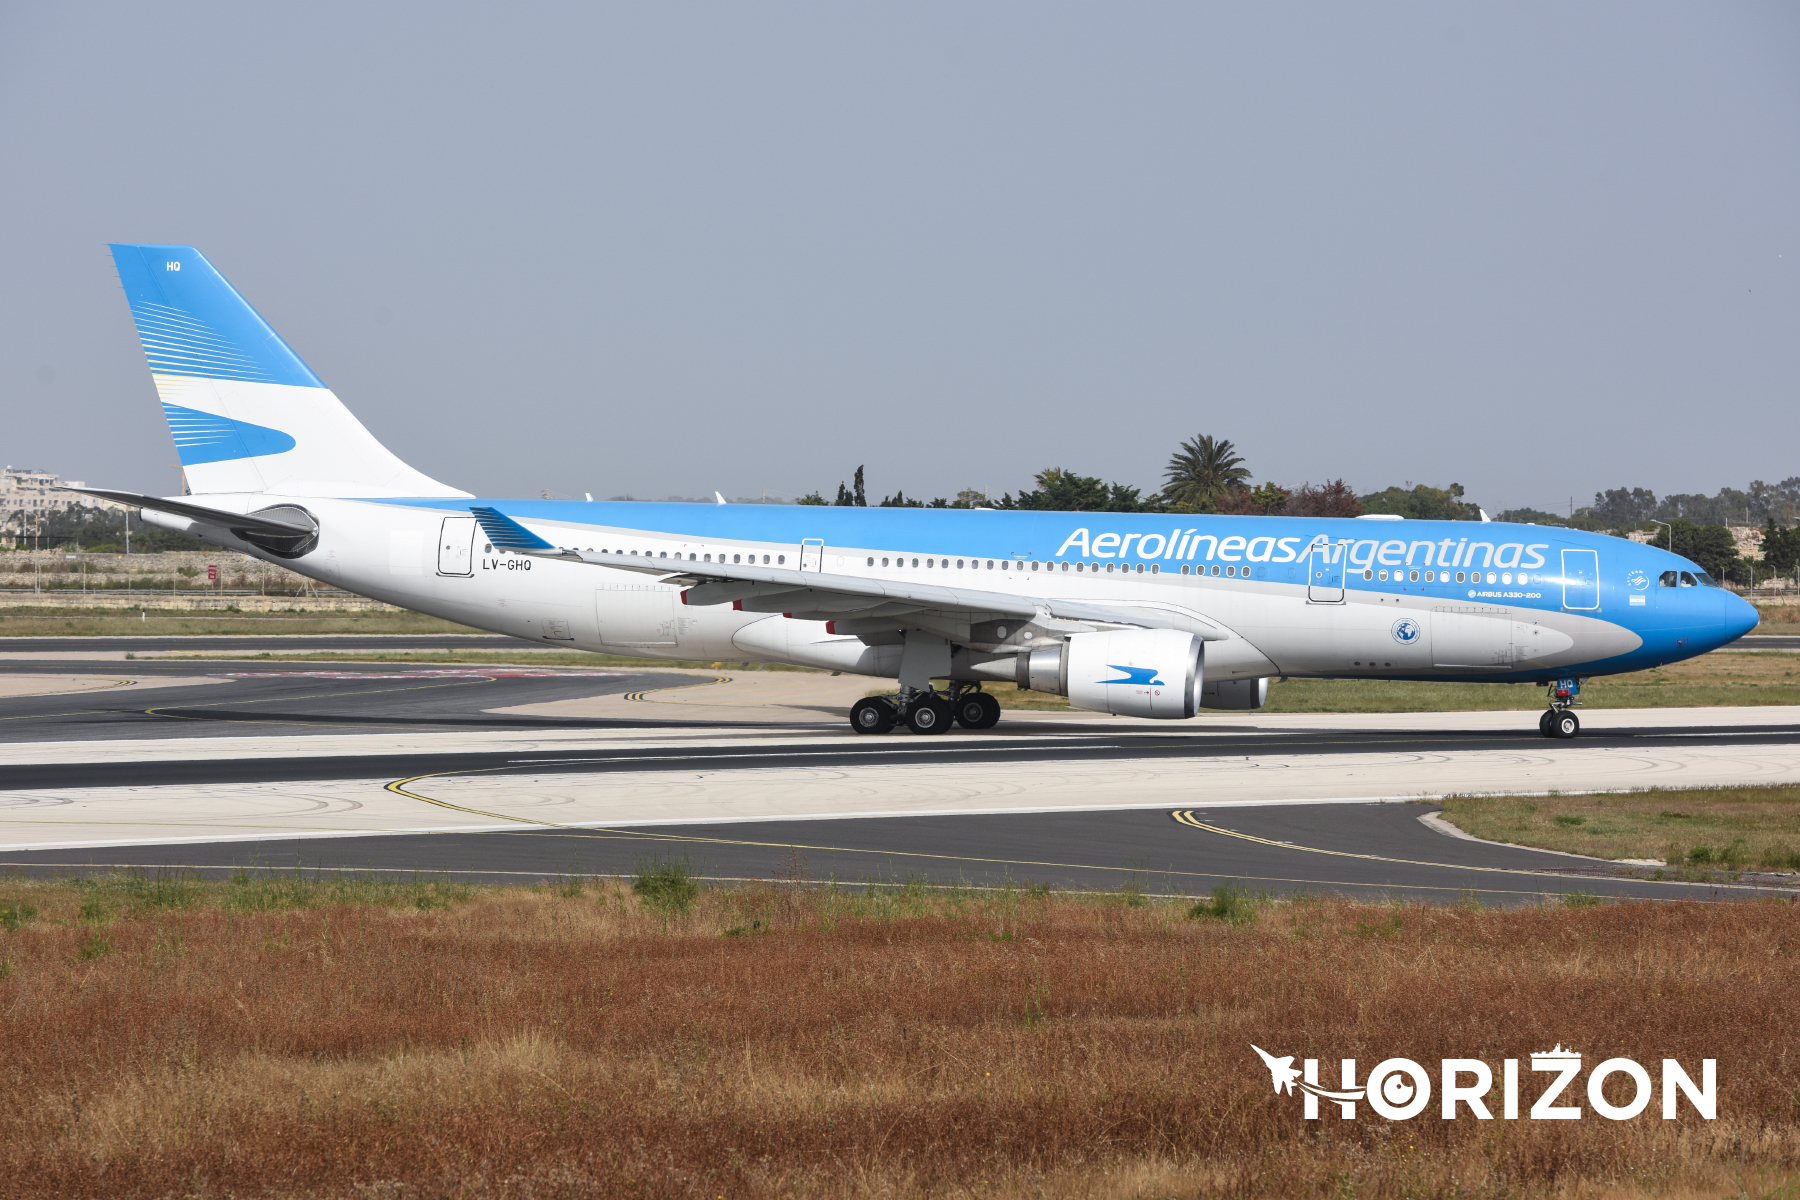 Aerolineas Argentinas Airbus A330-202 LV-GHQ. Photo: Joseph Borg